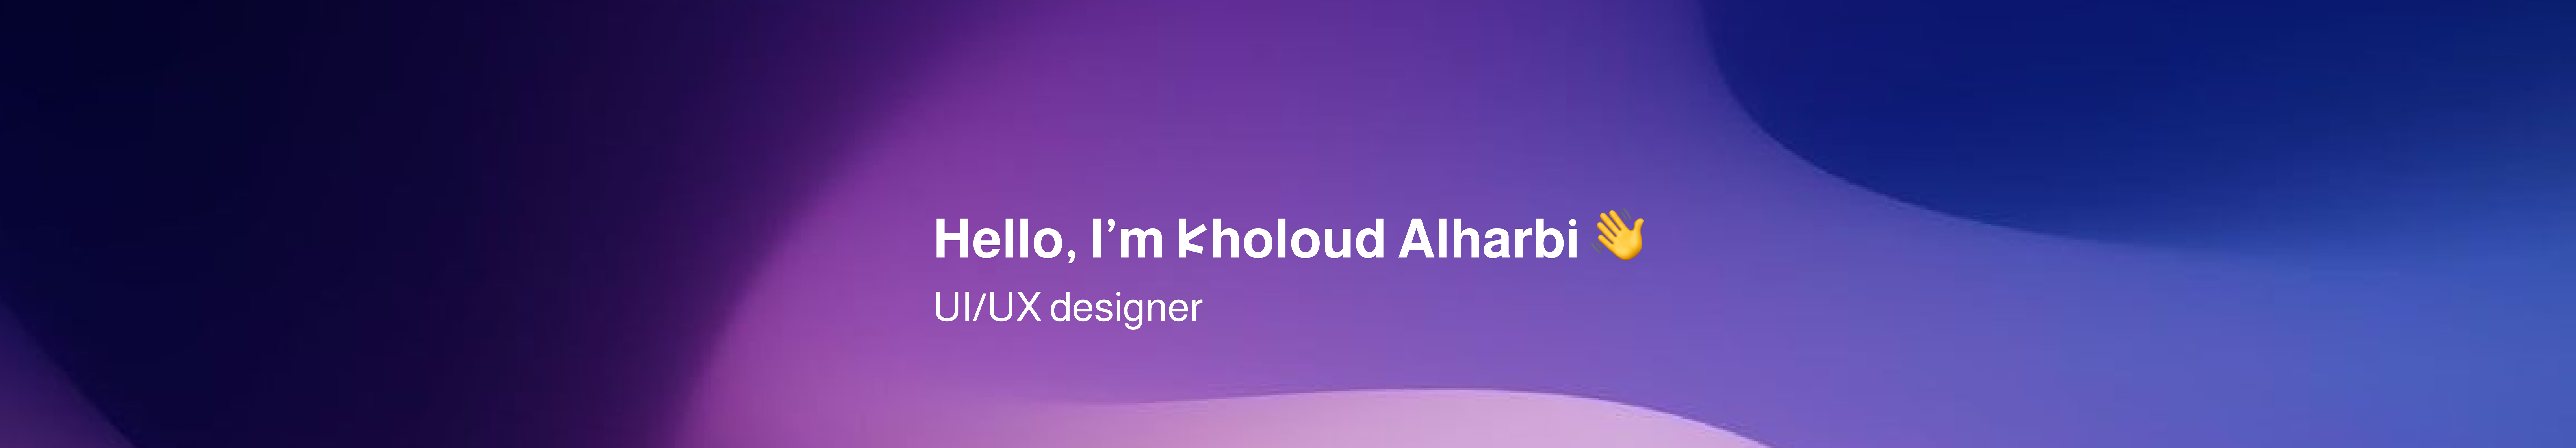 kholoud Alharbi's profile banner